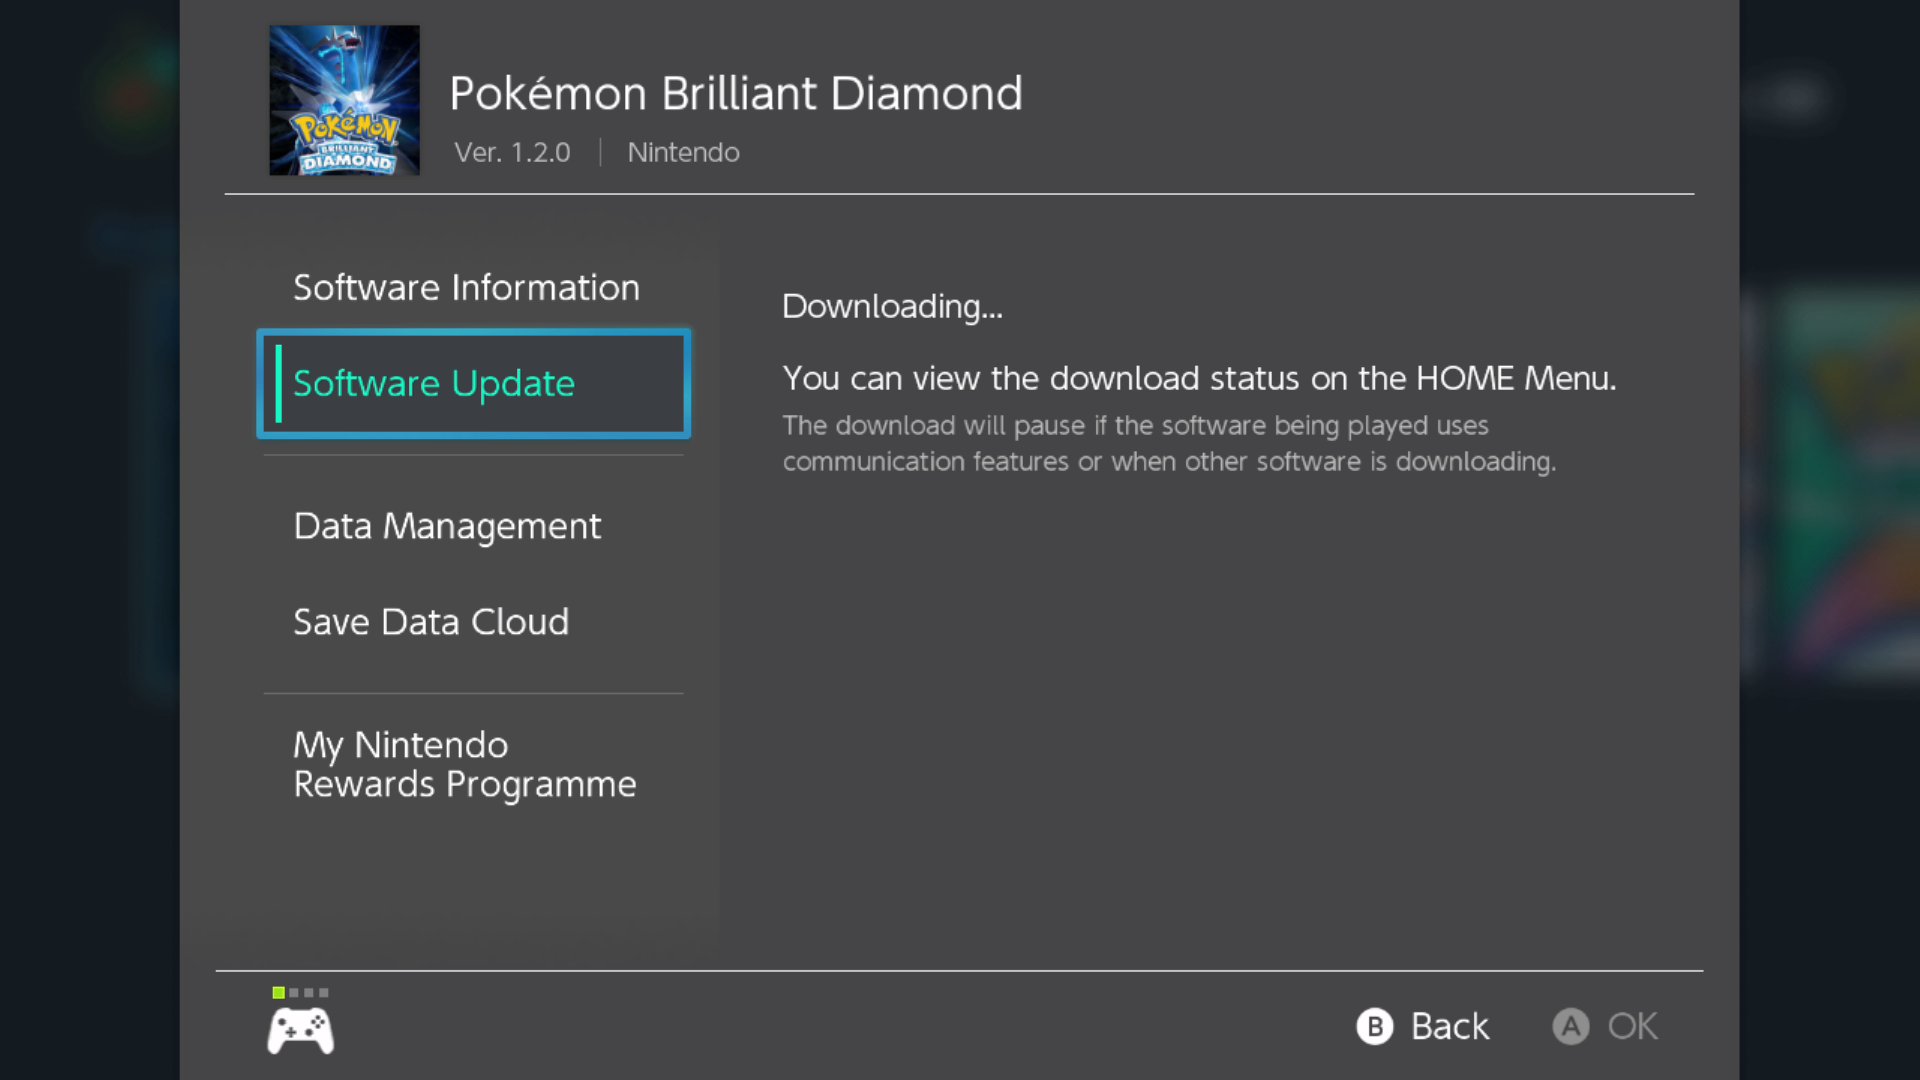 Serebii.net on X: Serebii Update: The Pokémon Brilliant Diamond